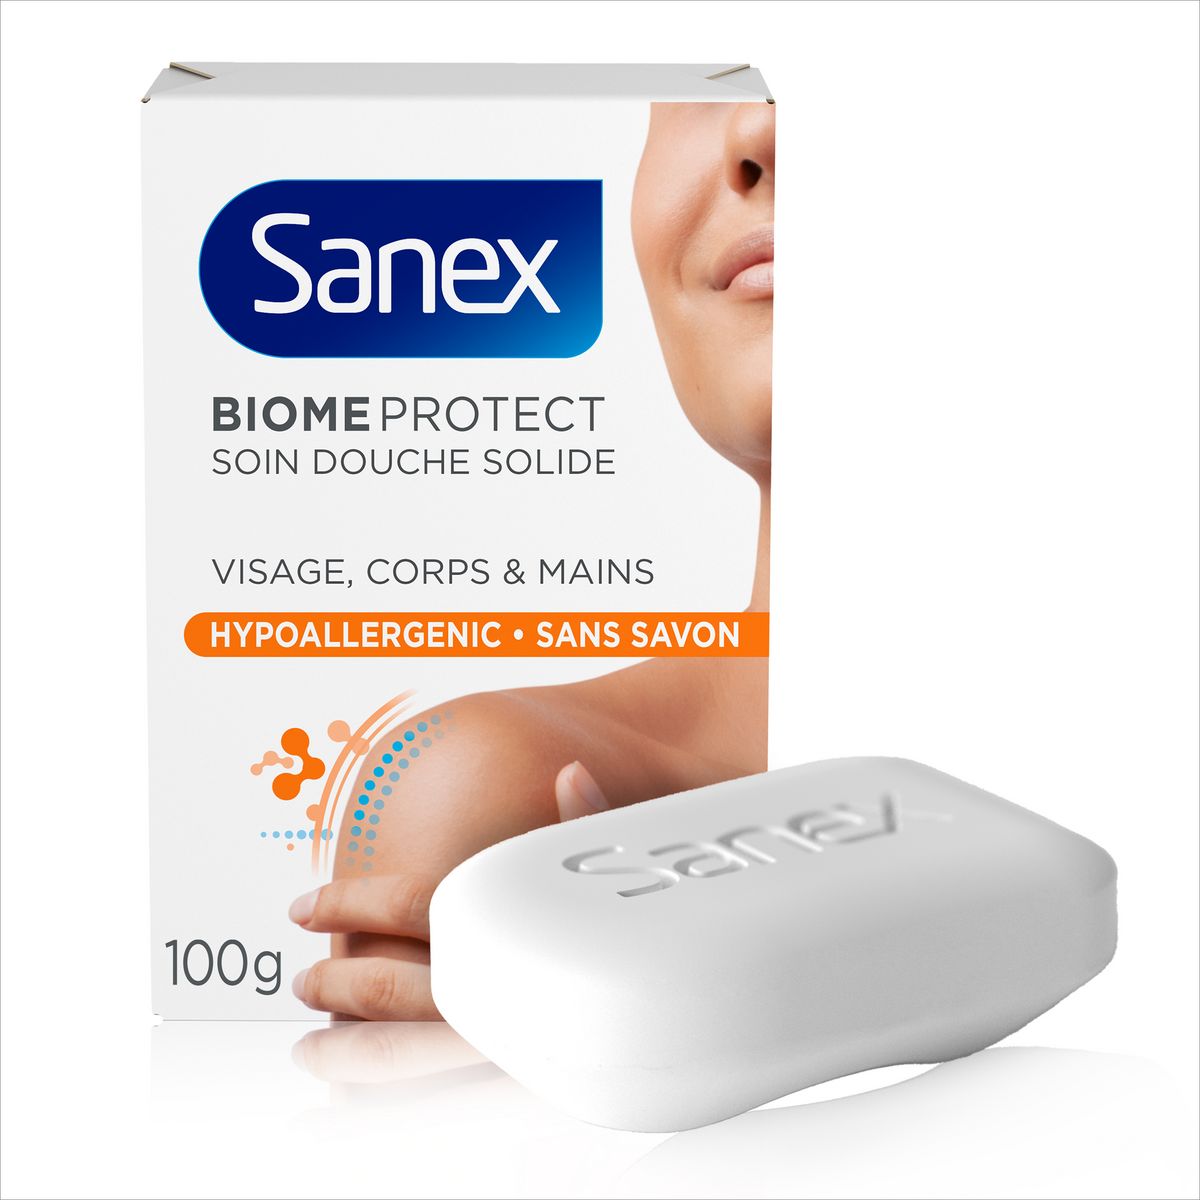 SANEX Biome protect Soin douche solide visage corps et mains 100g